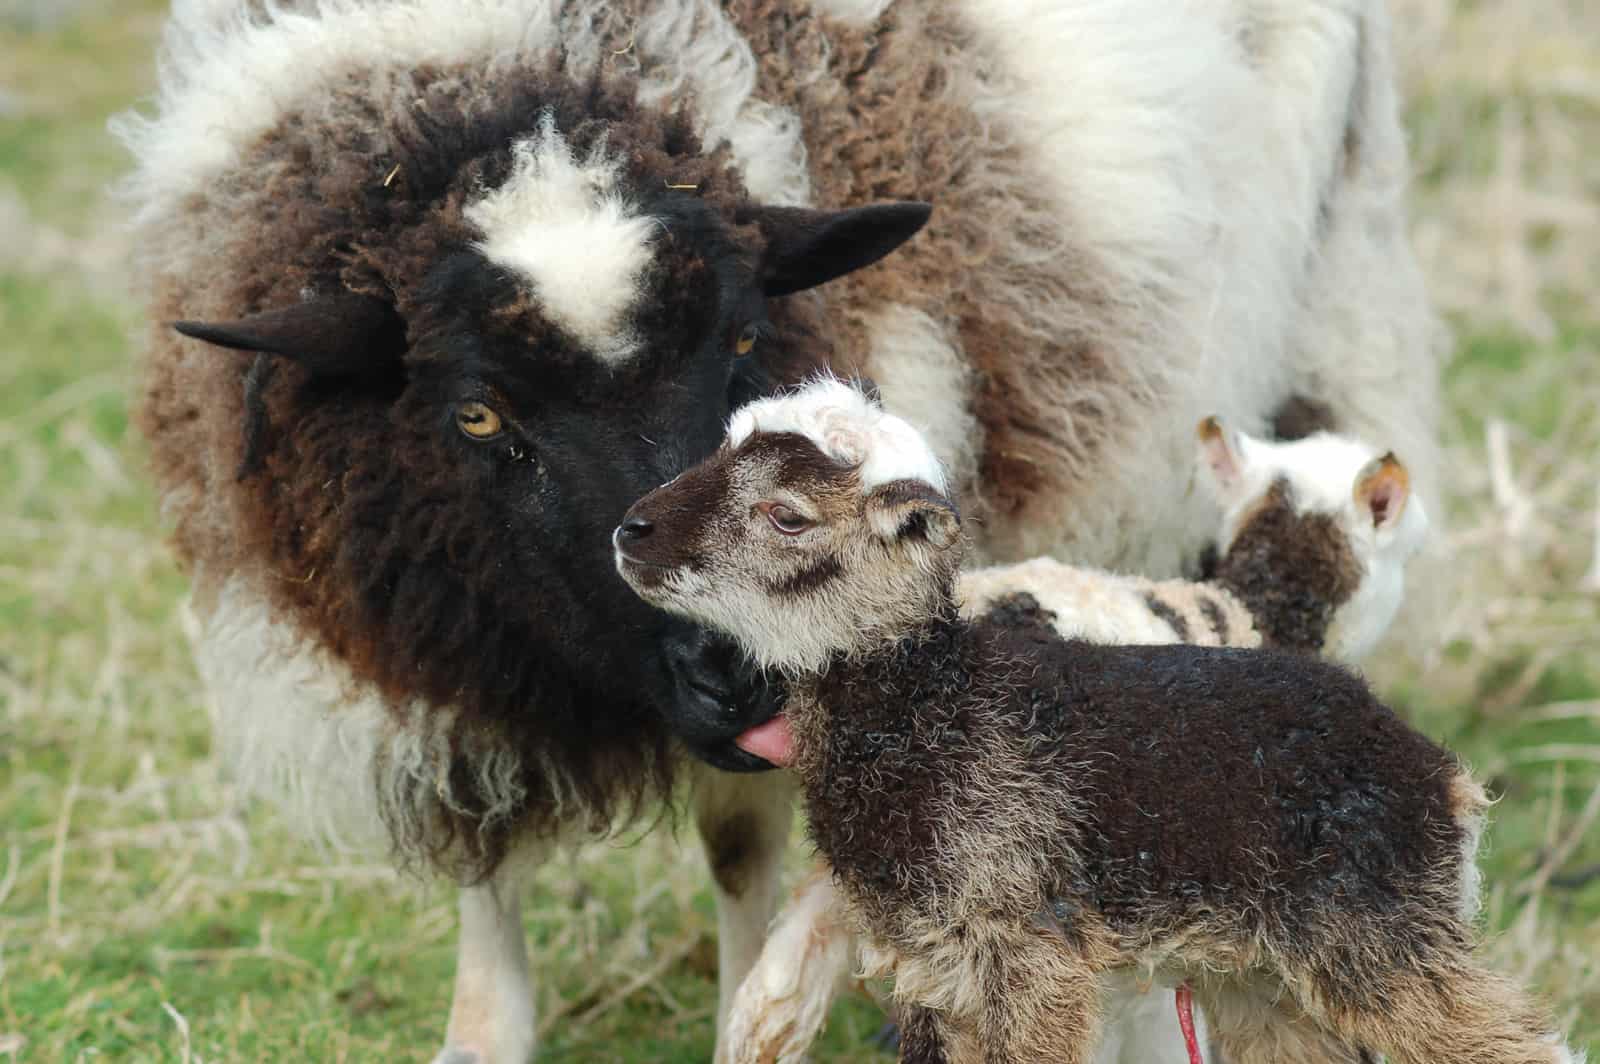 Fleur patchwprk sheep jacob cross shetland welsh mountain natural fleece wool spotty lambs